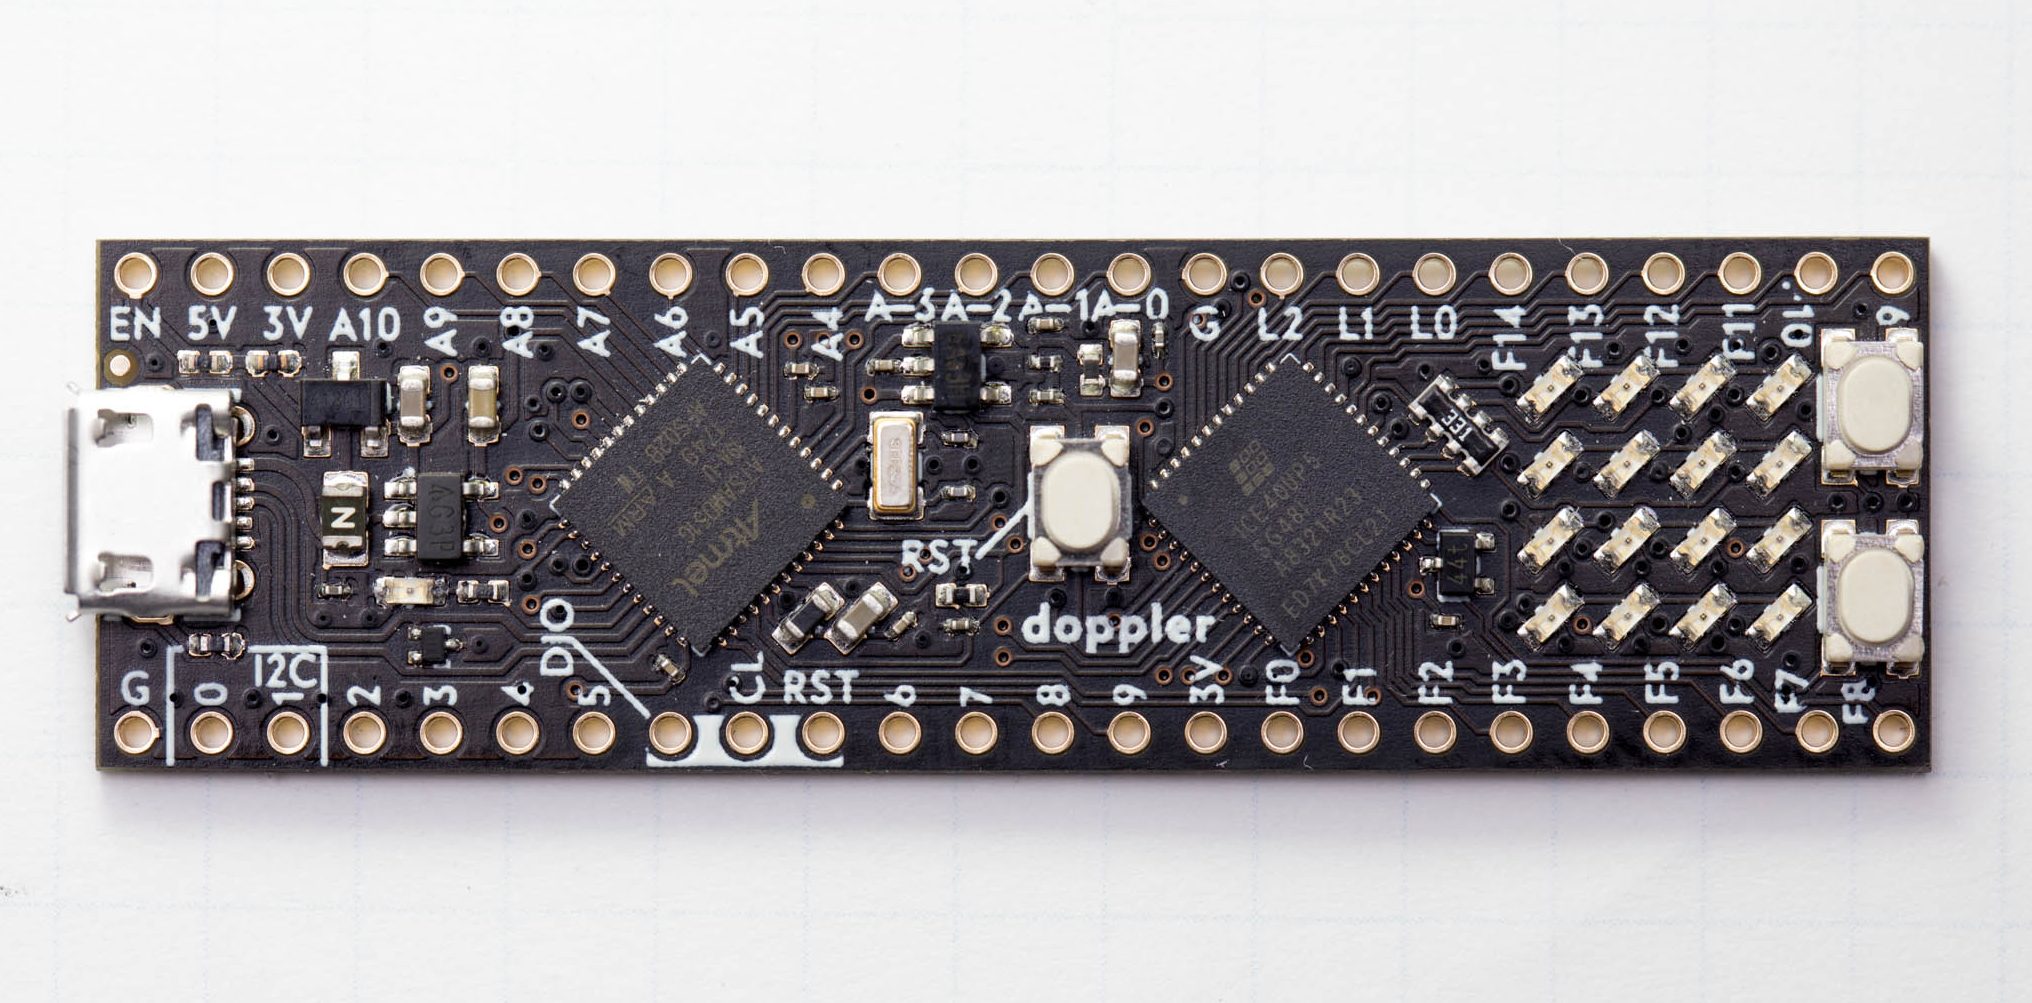 Dadamachines Doppler is a new FPGA Platform for Open Music Hardware